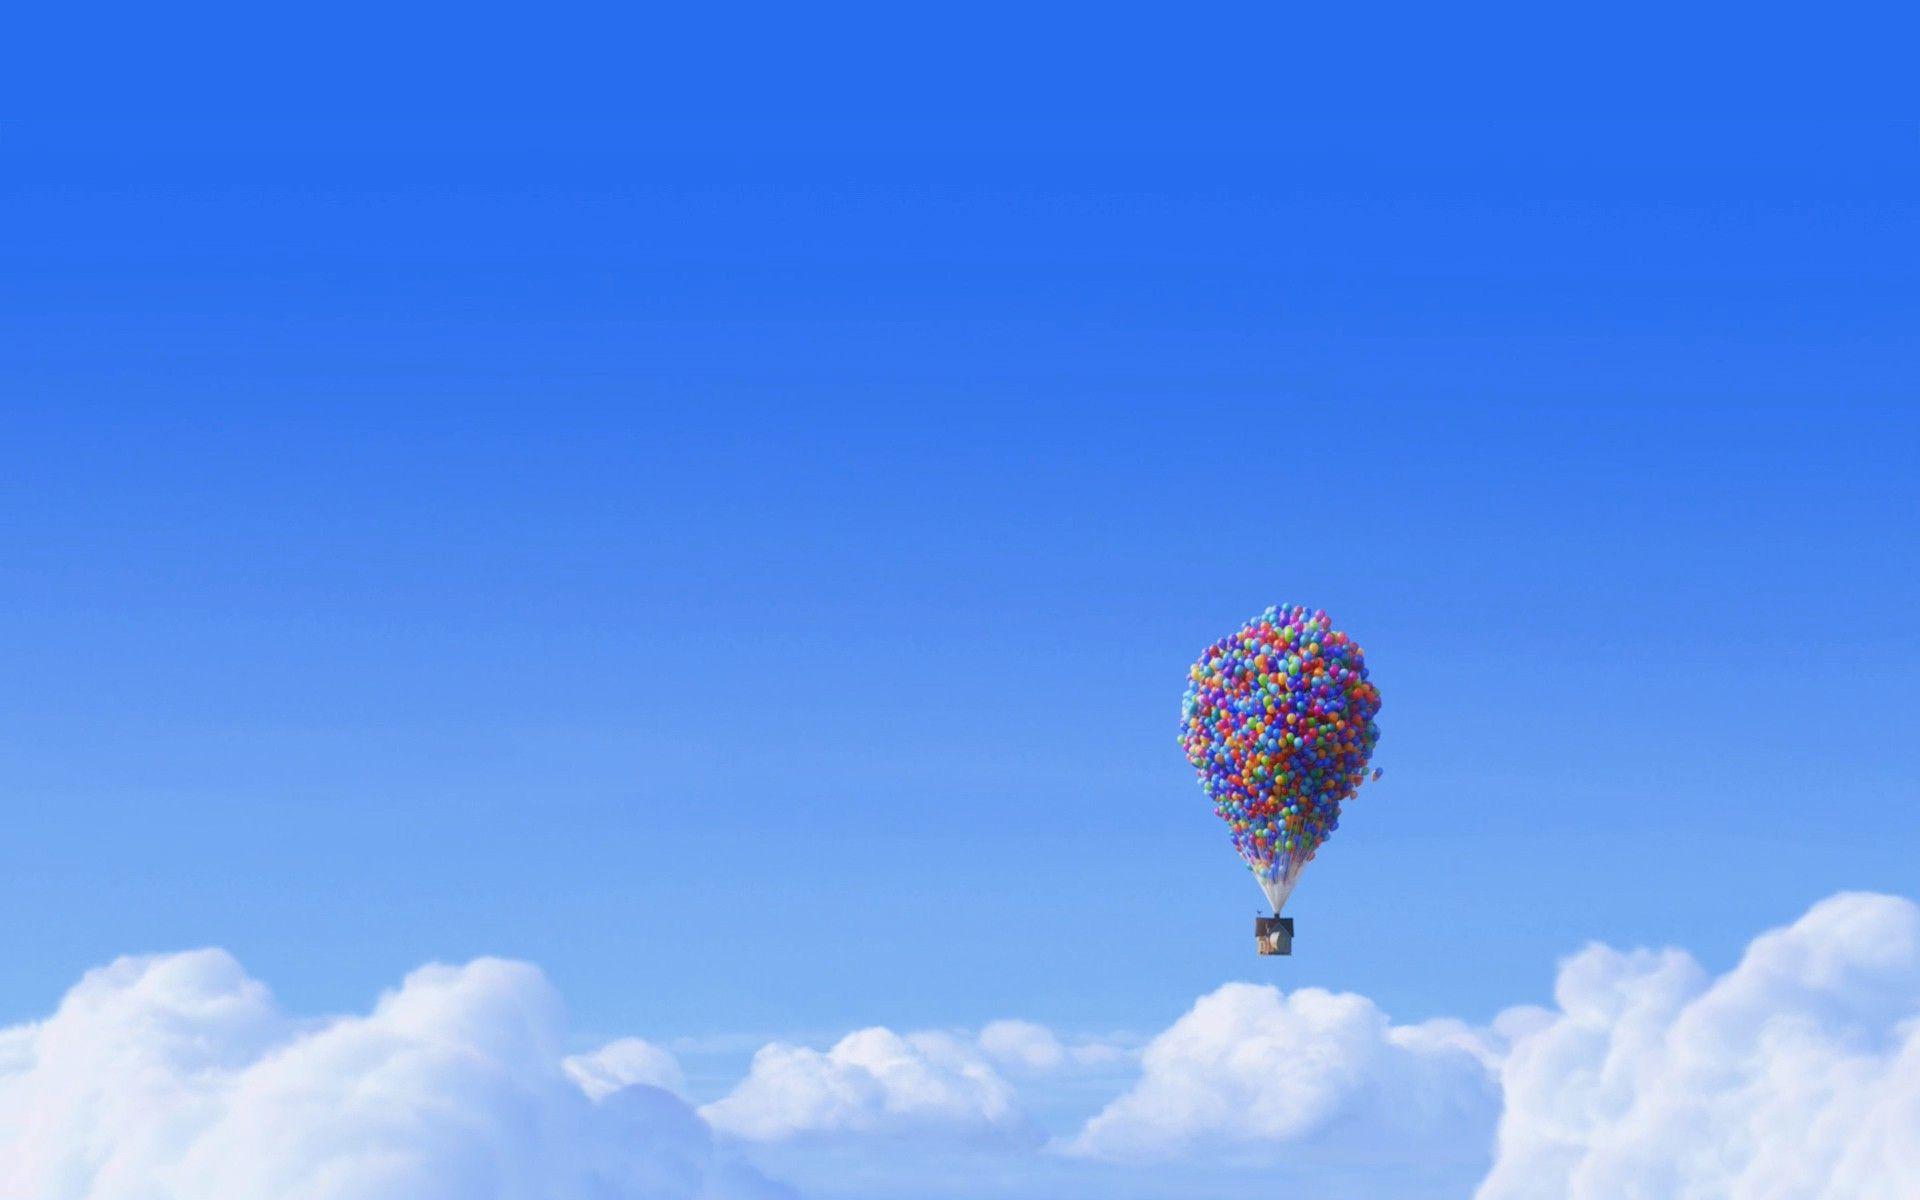 Disney Pixar Up Wallpaper. Wallpaper For Desktop